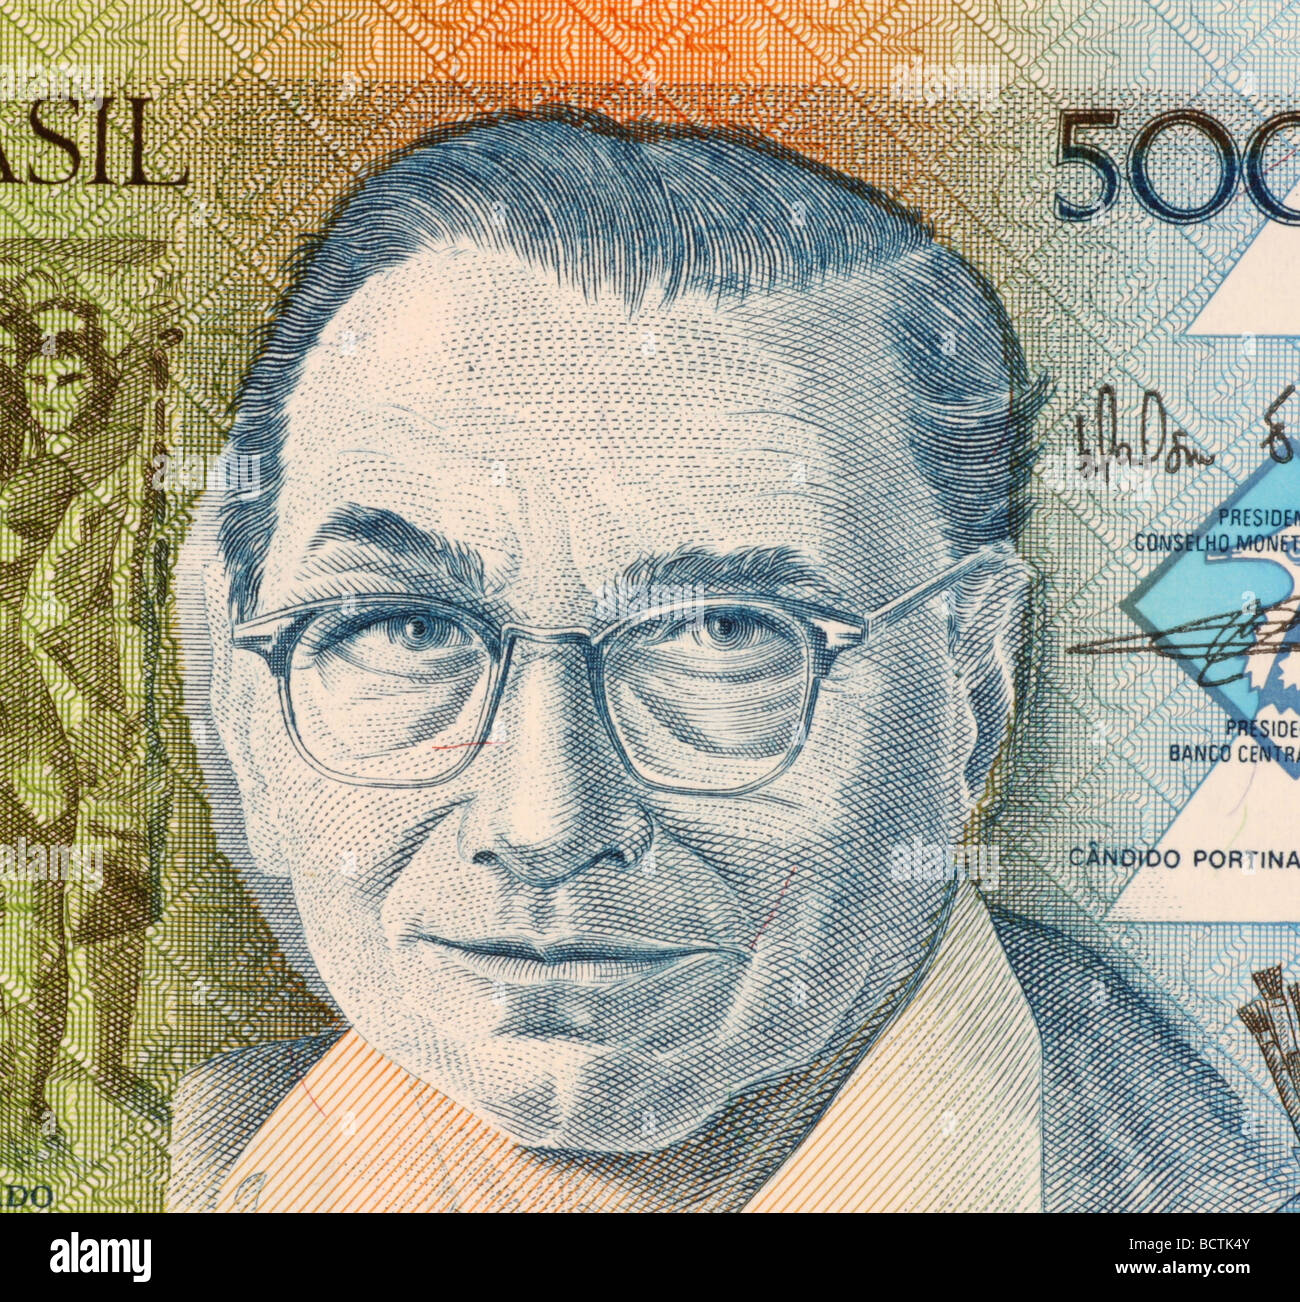 Candido Portinari on 5000 Cruzados 1988 Banknote from Brazil Stock Photo